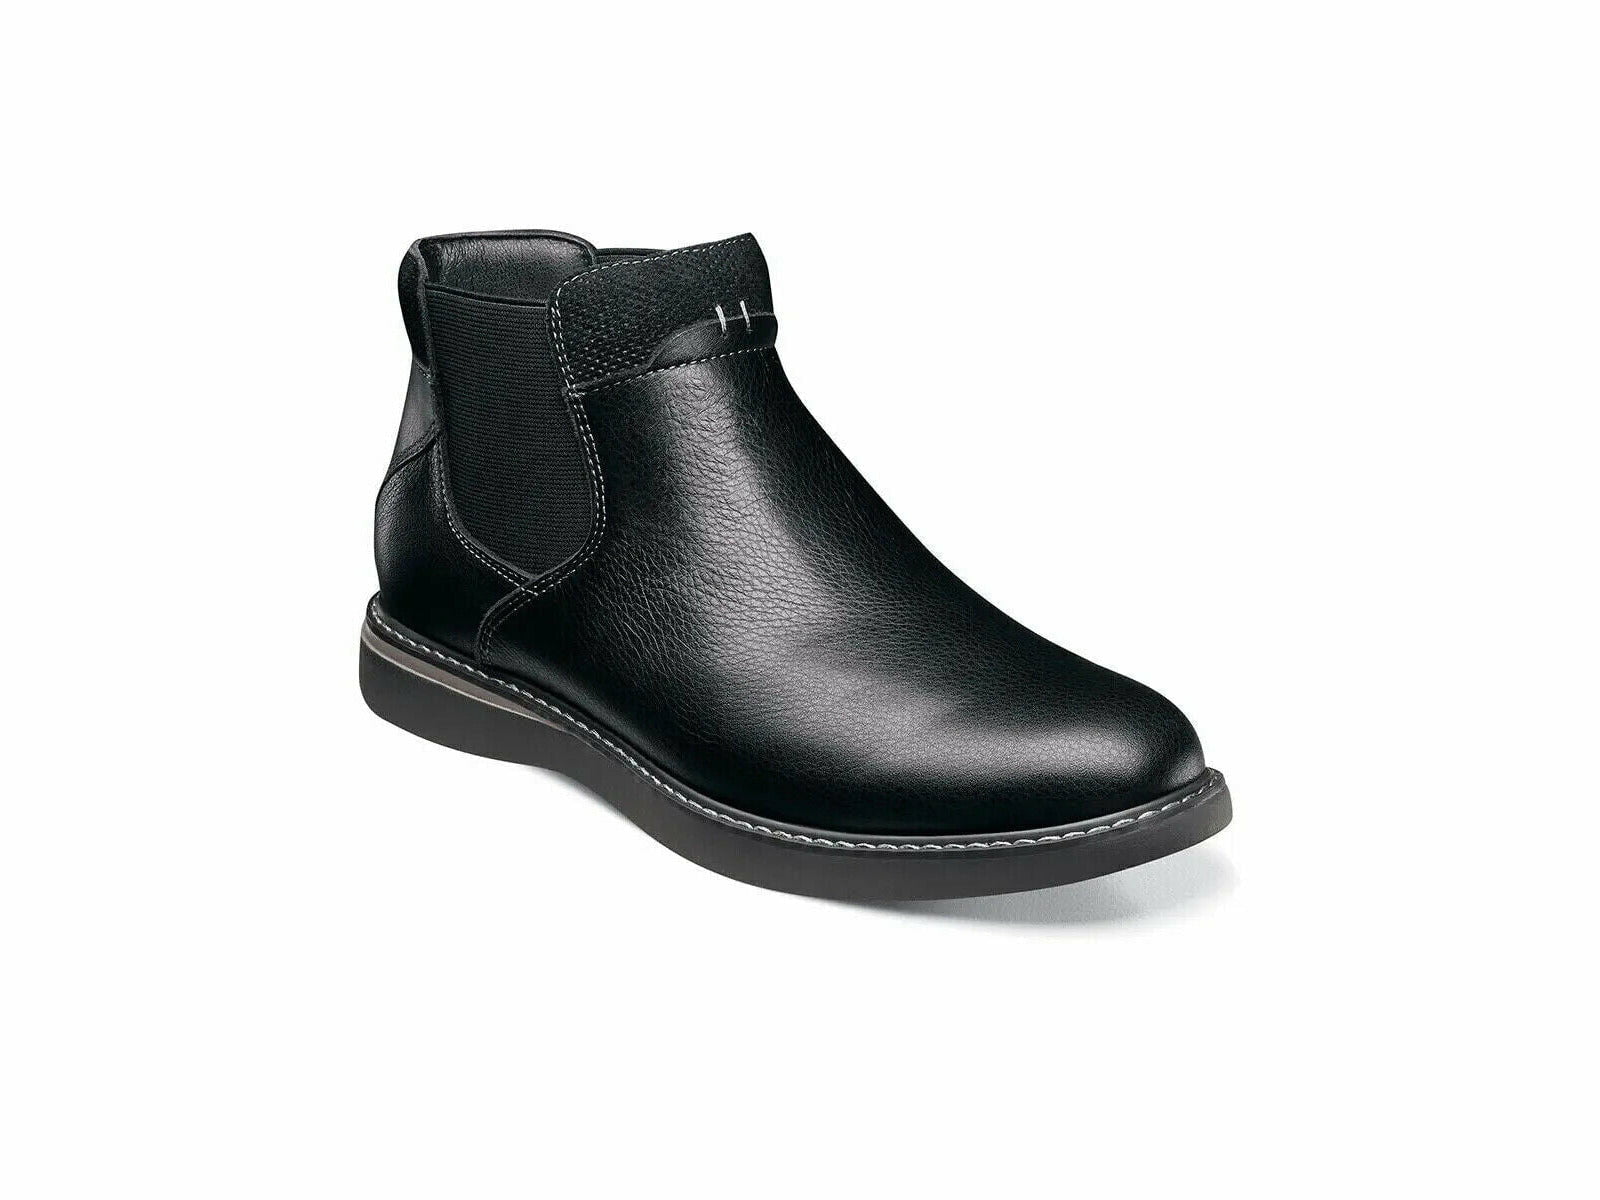 Nunn Bush Bayridge Plain Toe Chelsea Black Leather 84929-001 -